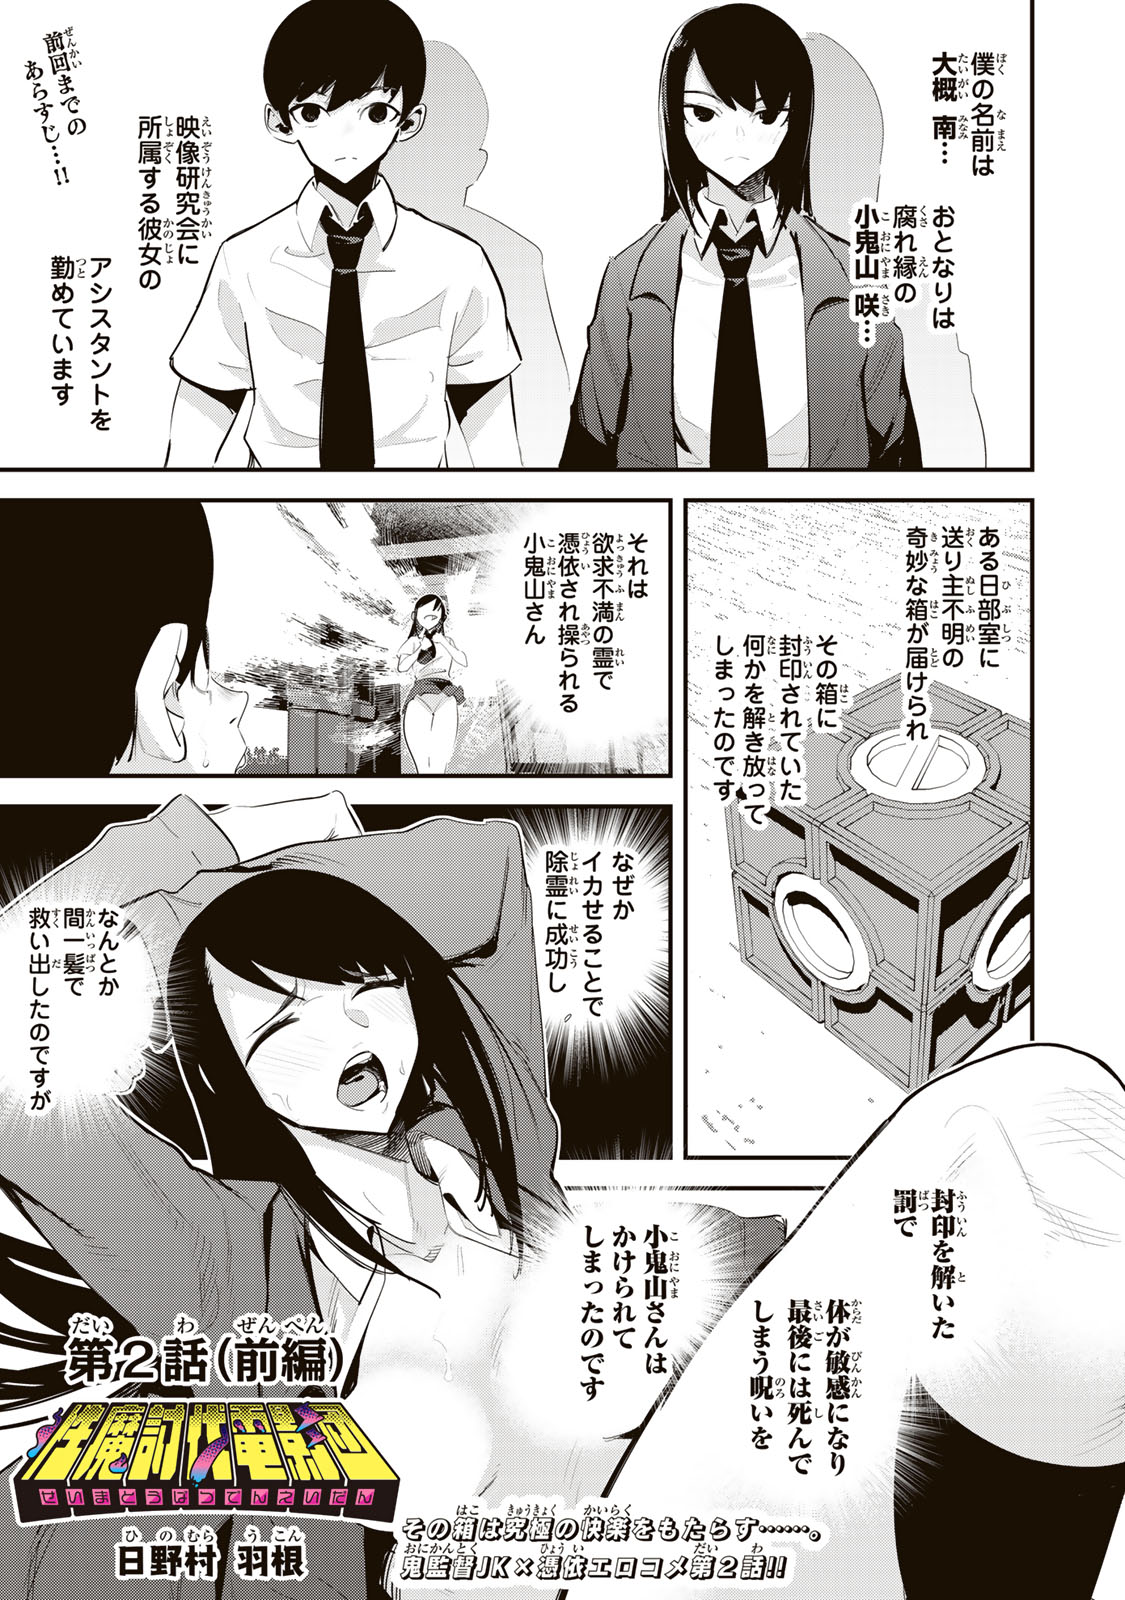 Seima Toubatsu Deneidan - Chapter 2 - Page 1